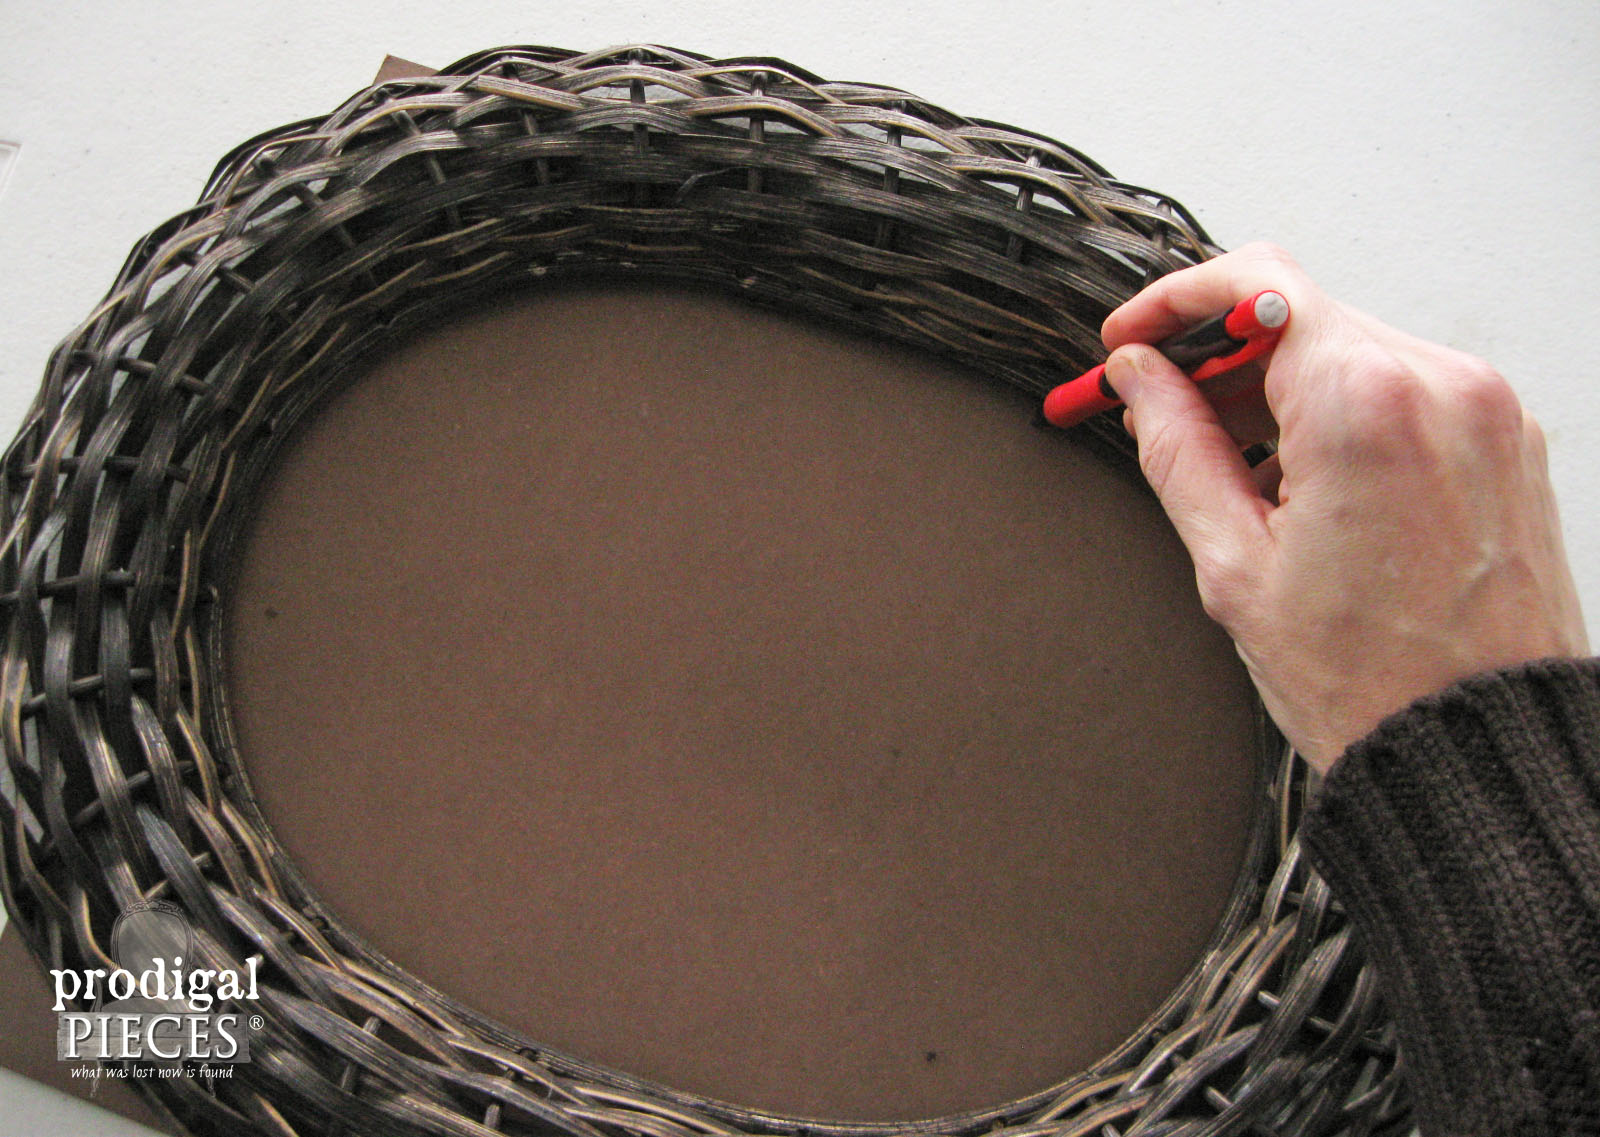 Tracing Thrifted Basket Frame | Prodigal Pieces | www.prodigalpieces.com